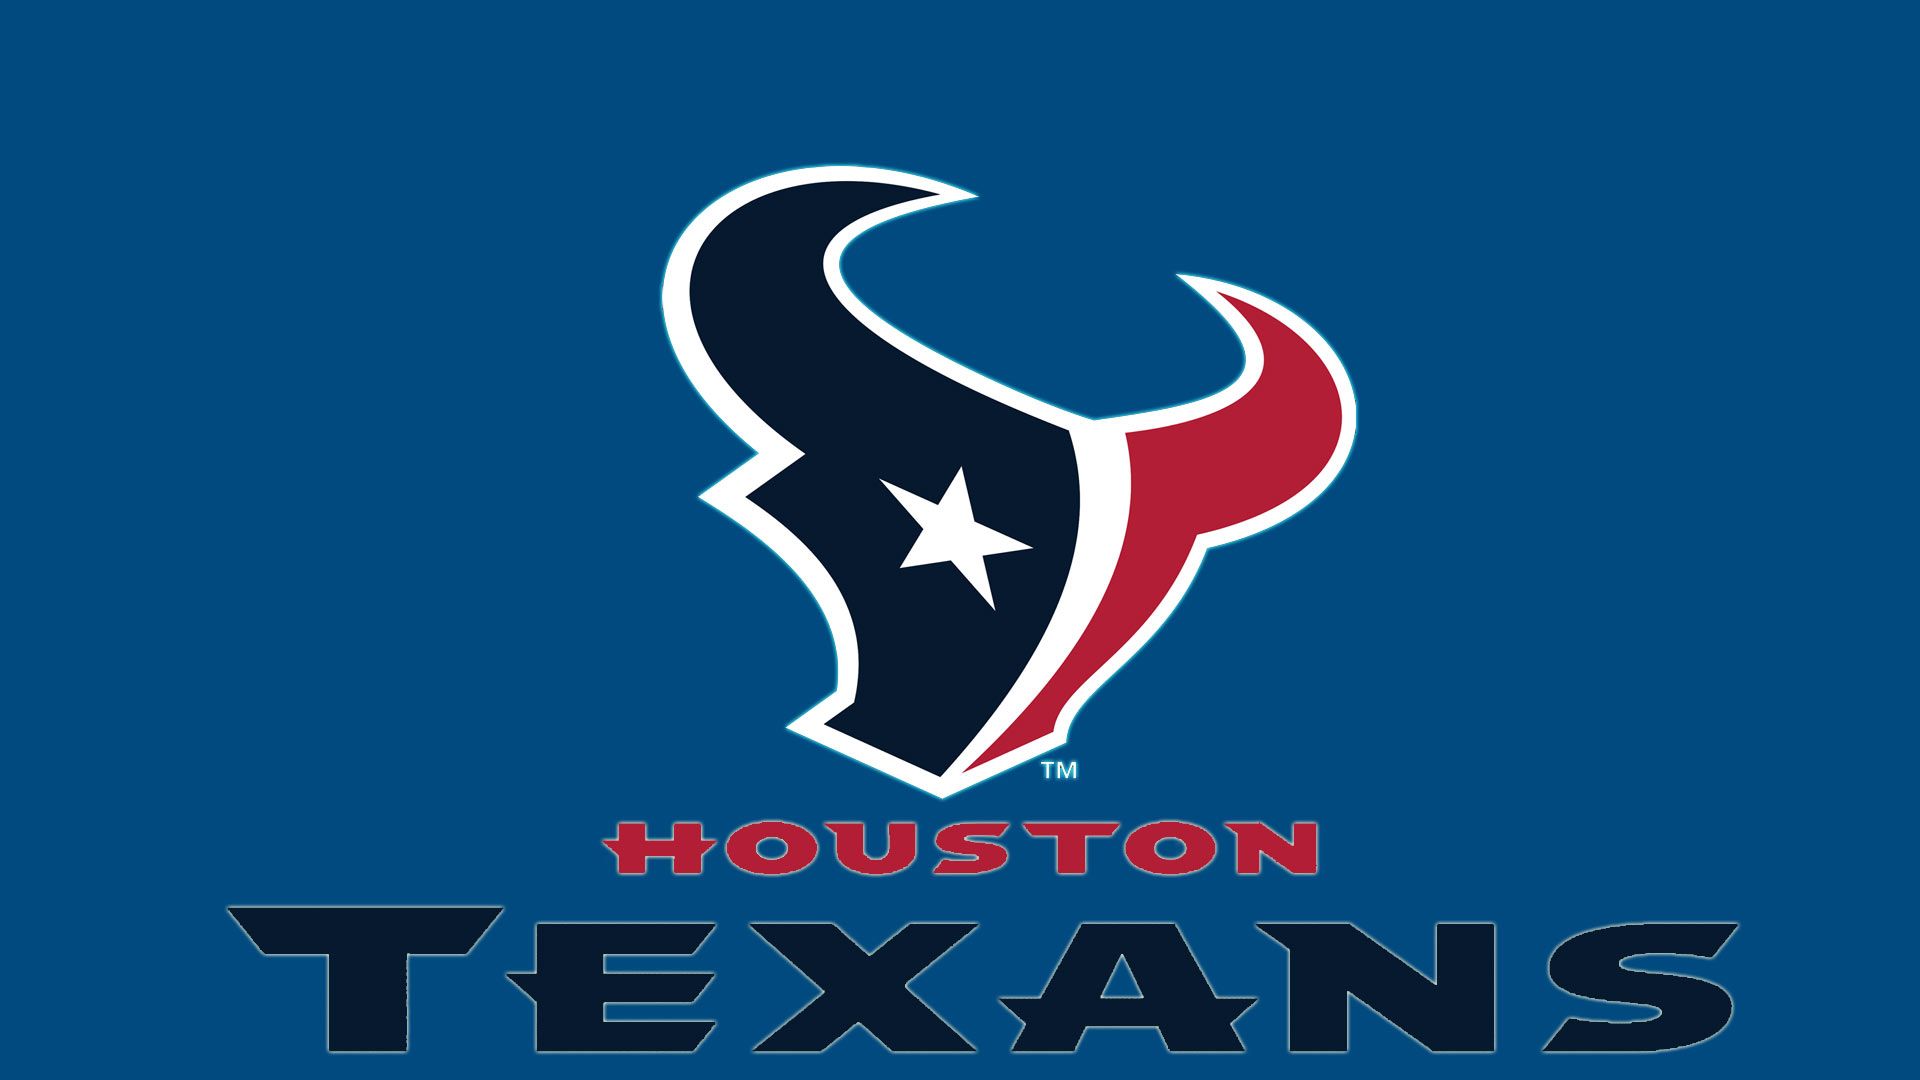 Houston texans clipart logo